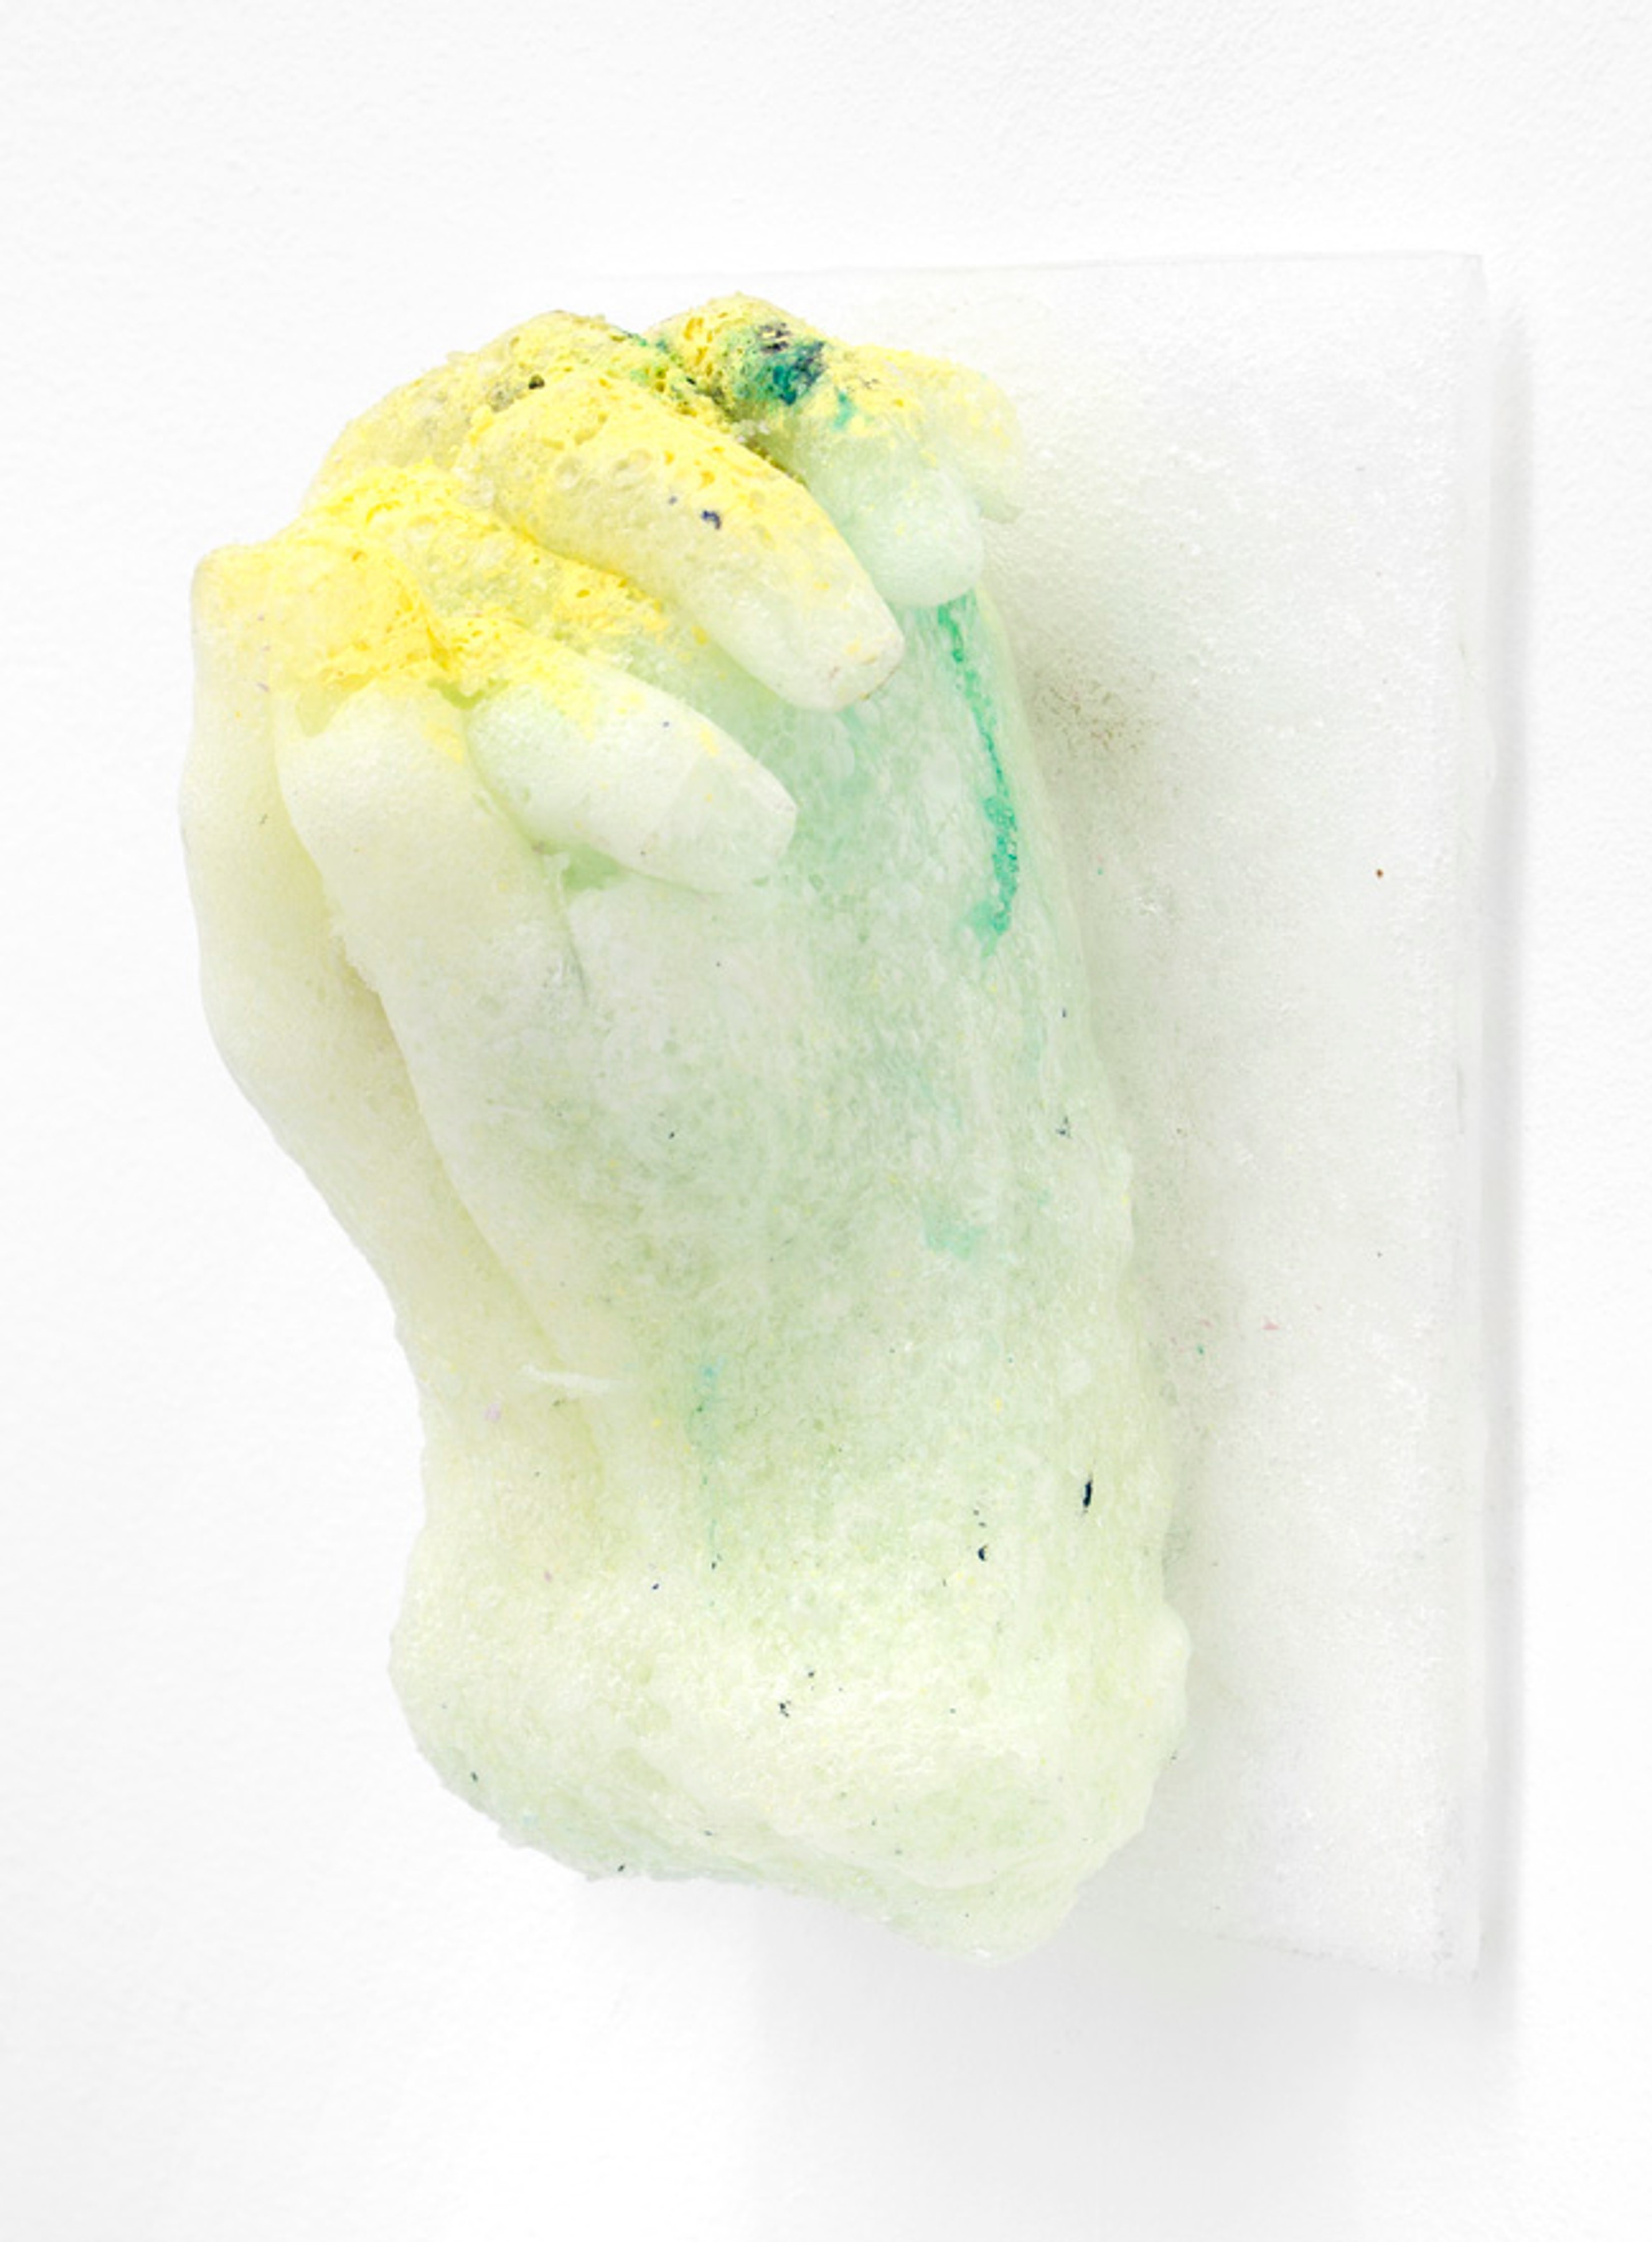 Shroom Cloud Hands (Yellow) , 2014
Polyurethane, acrylic print
8.5 x 5 x 3.5 inches